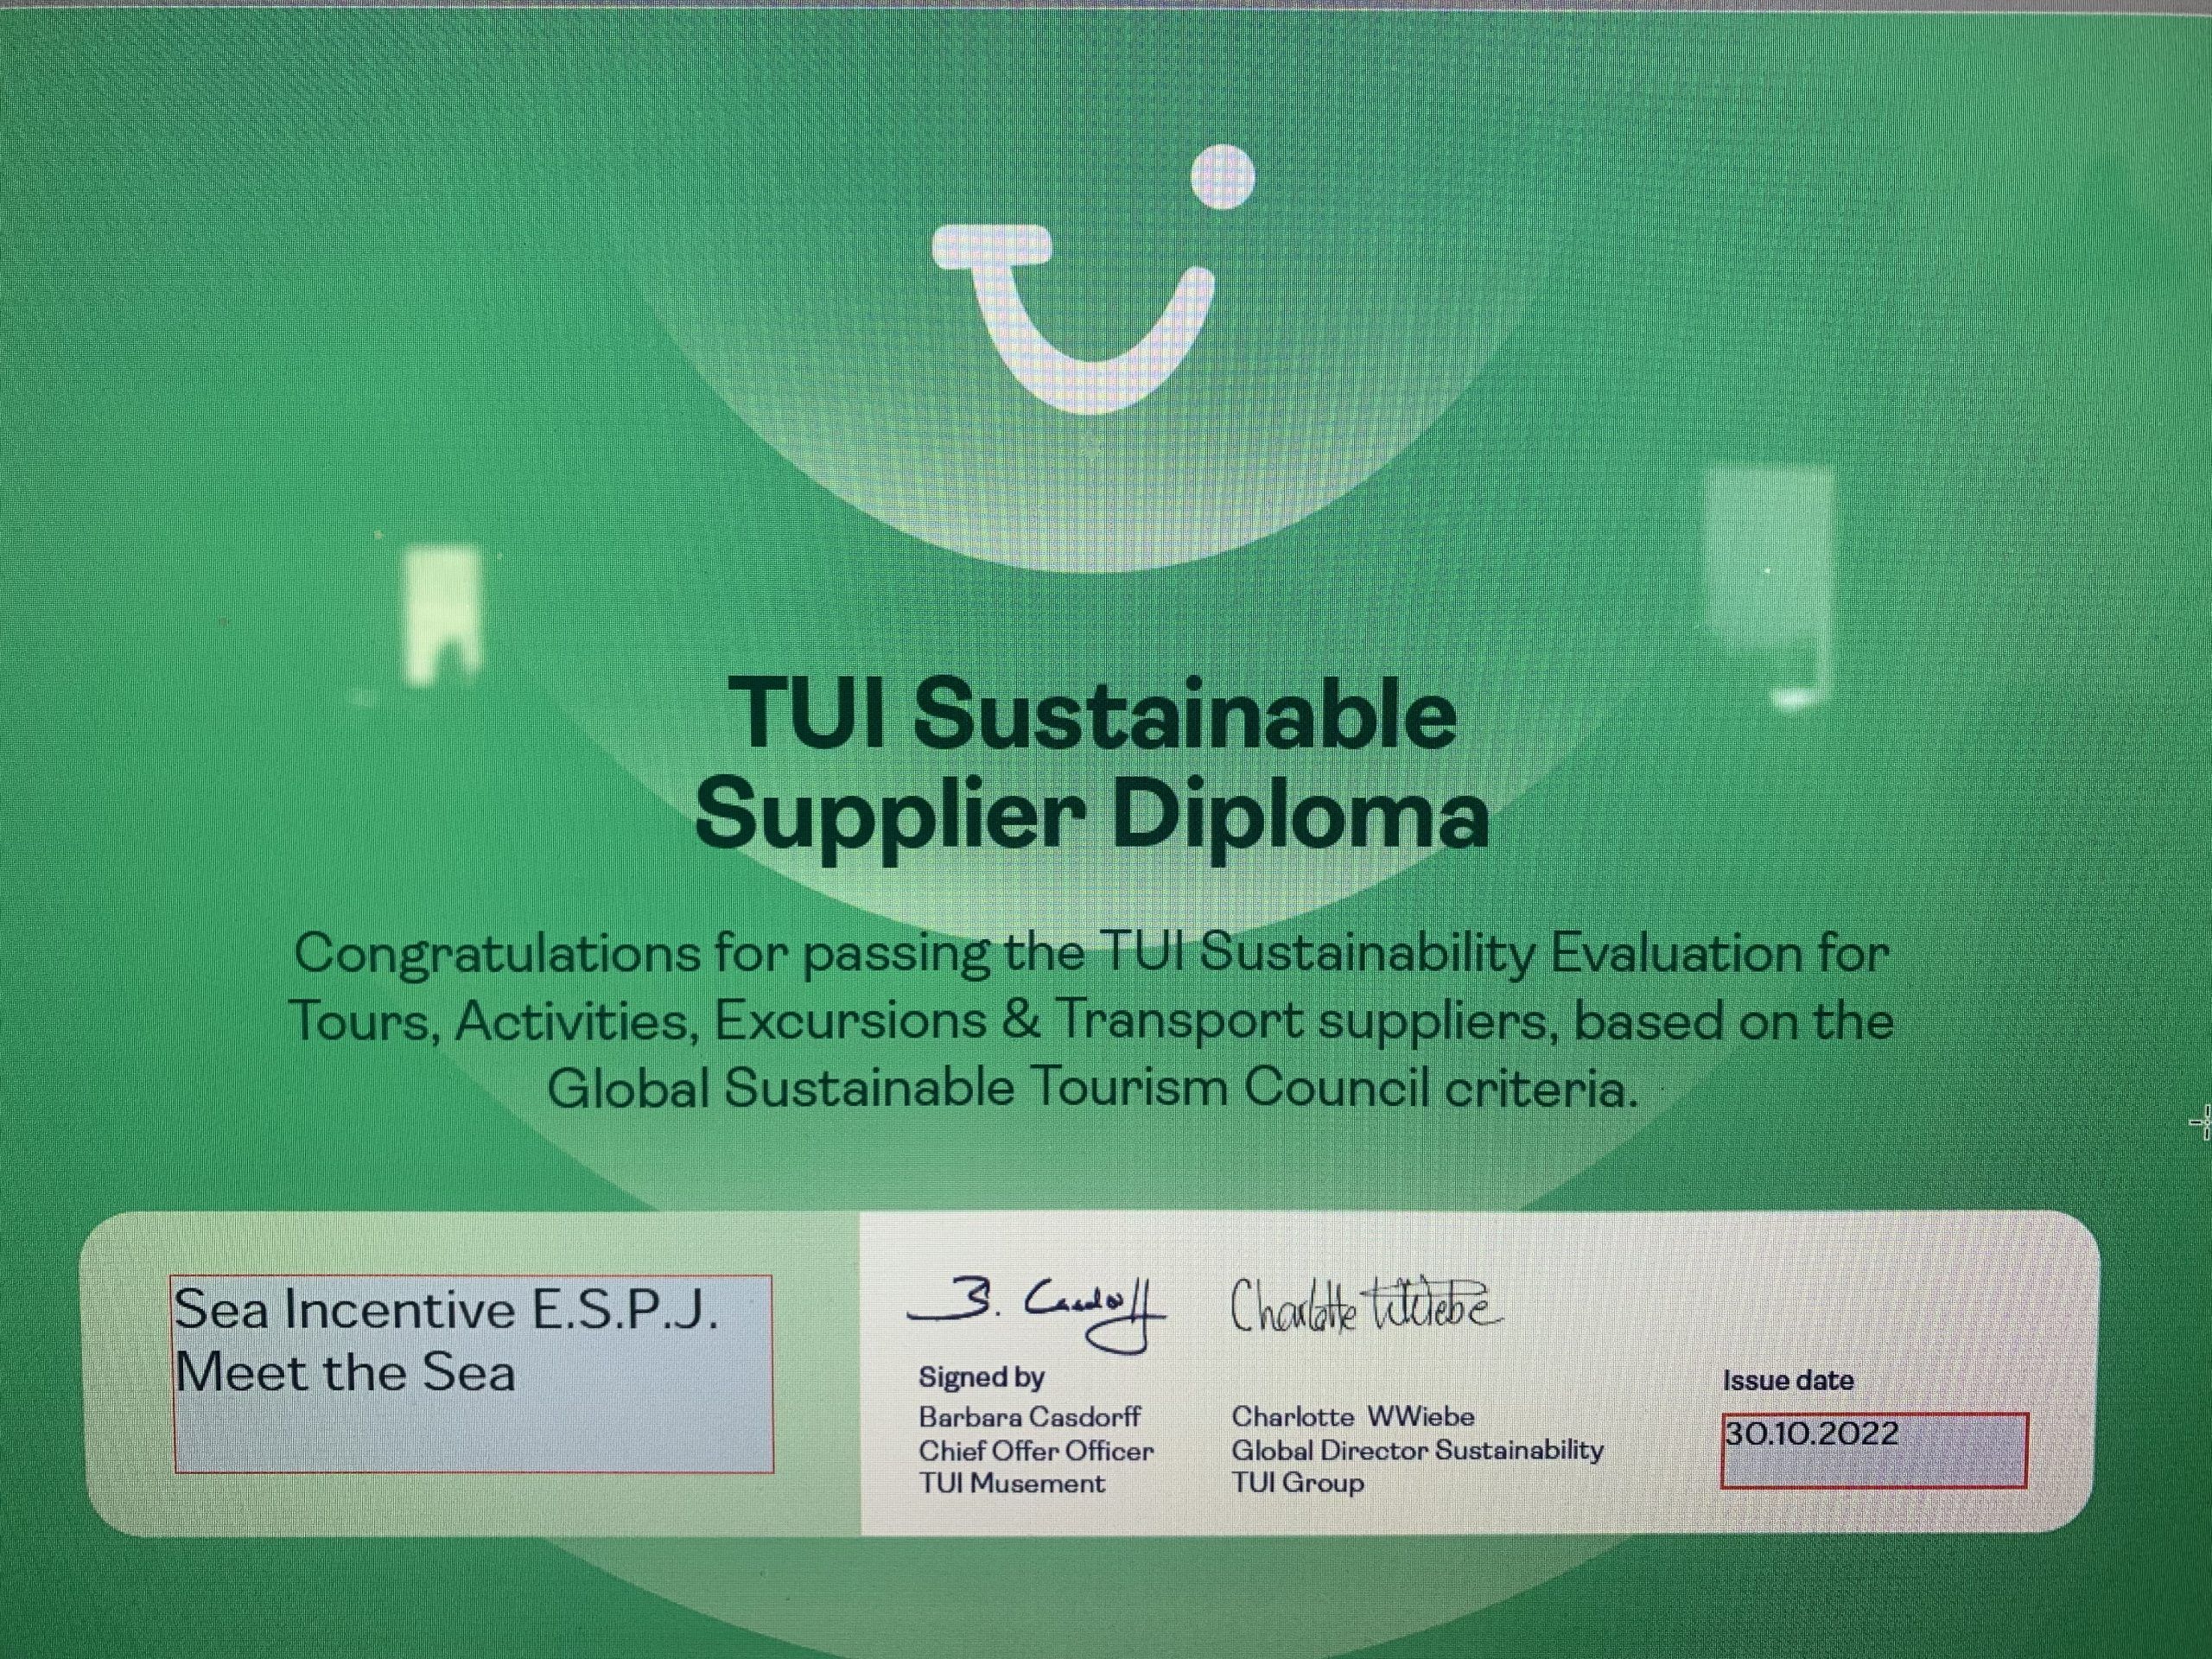 TUI sustainability diploma bestowed upon Meet the Sea